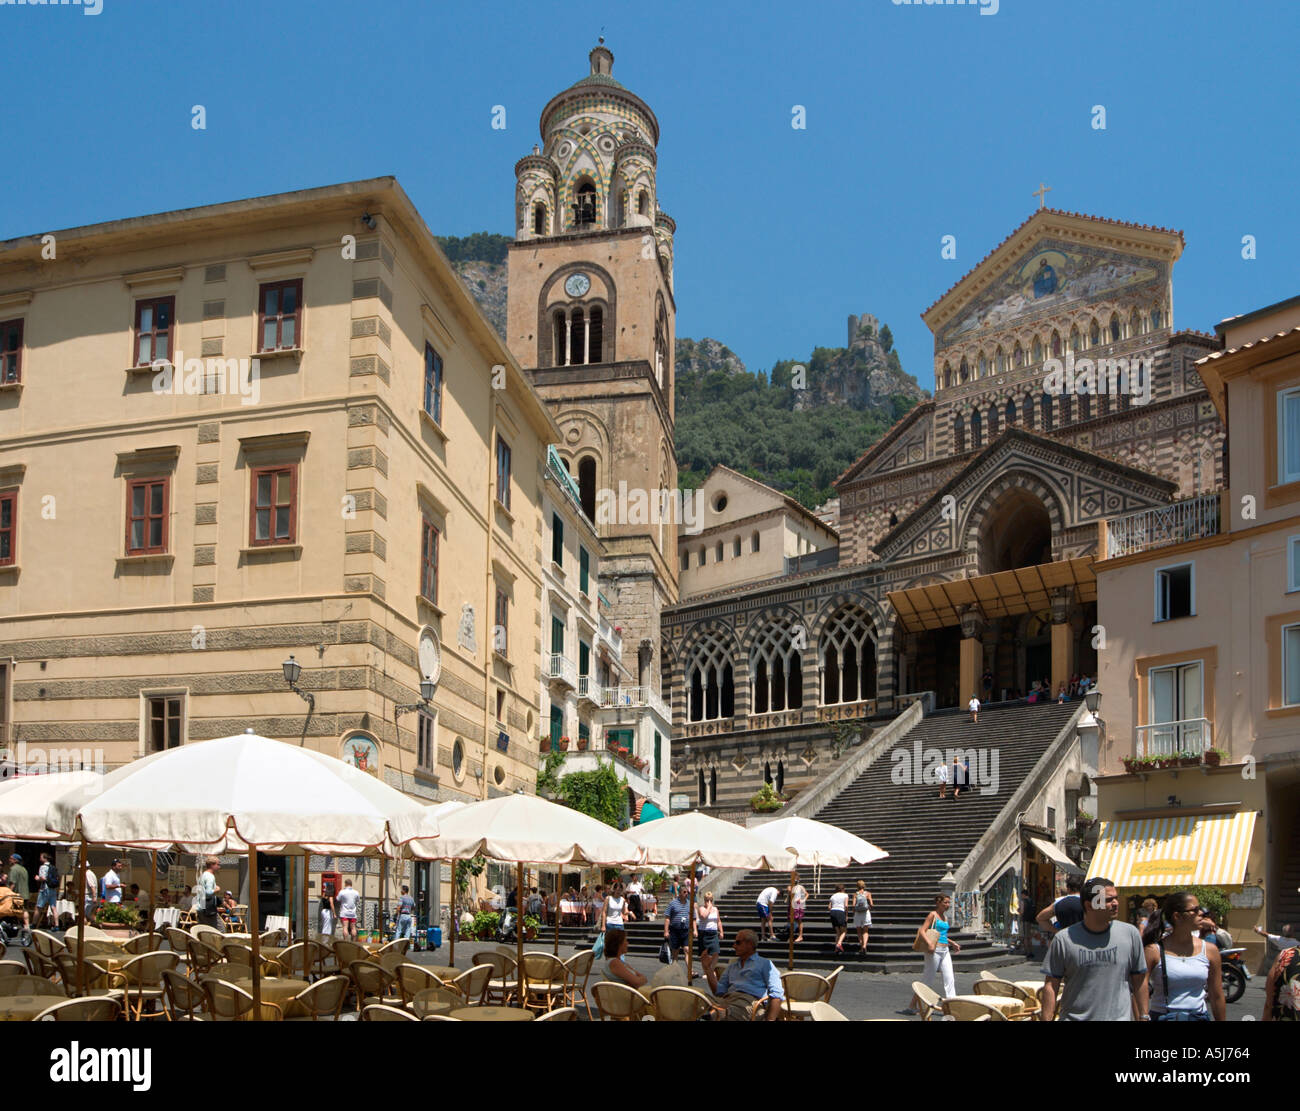 Der Duomo. Amalfi, neapolitanische Riviera, Italien Stockfoto